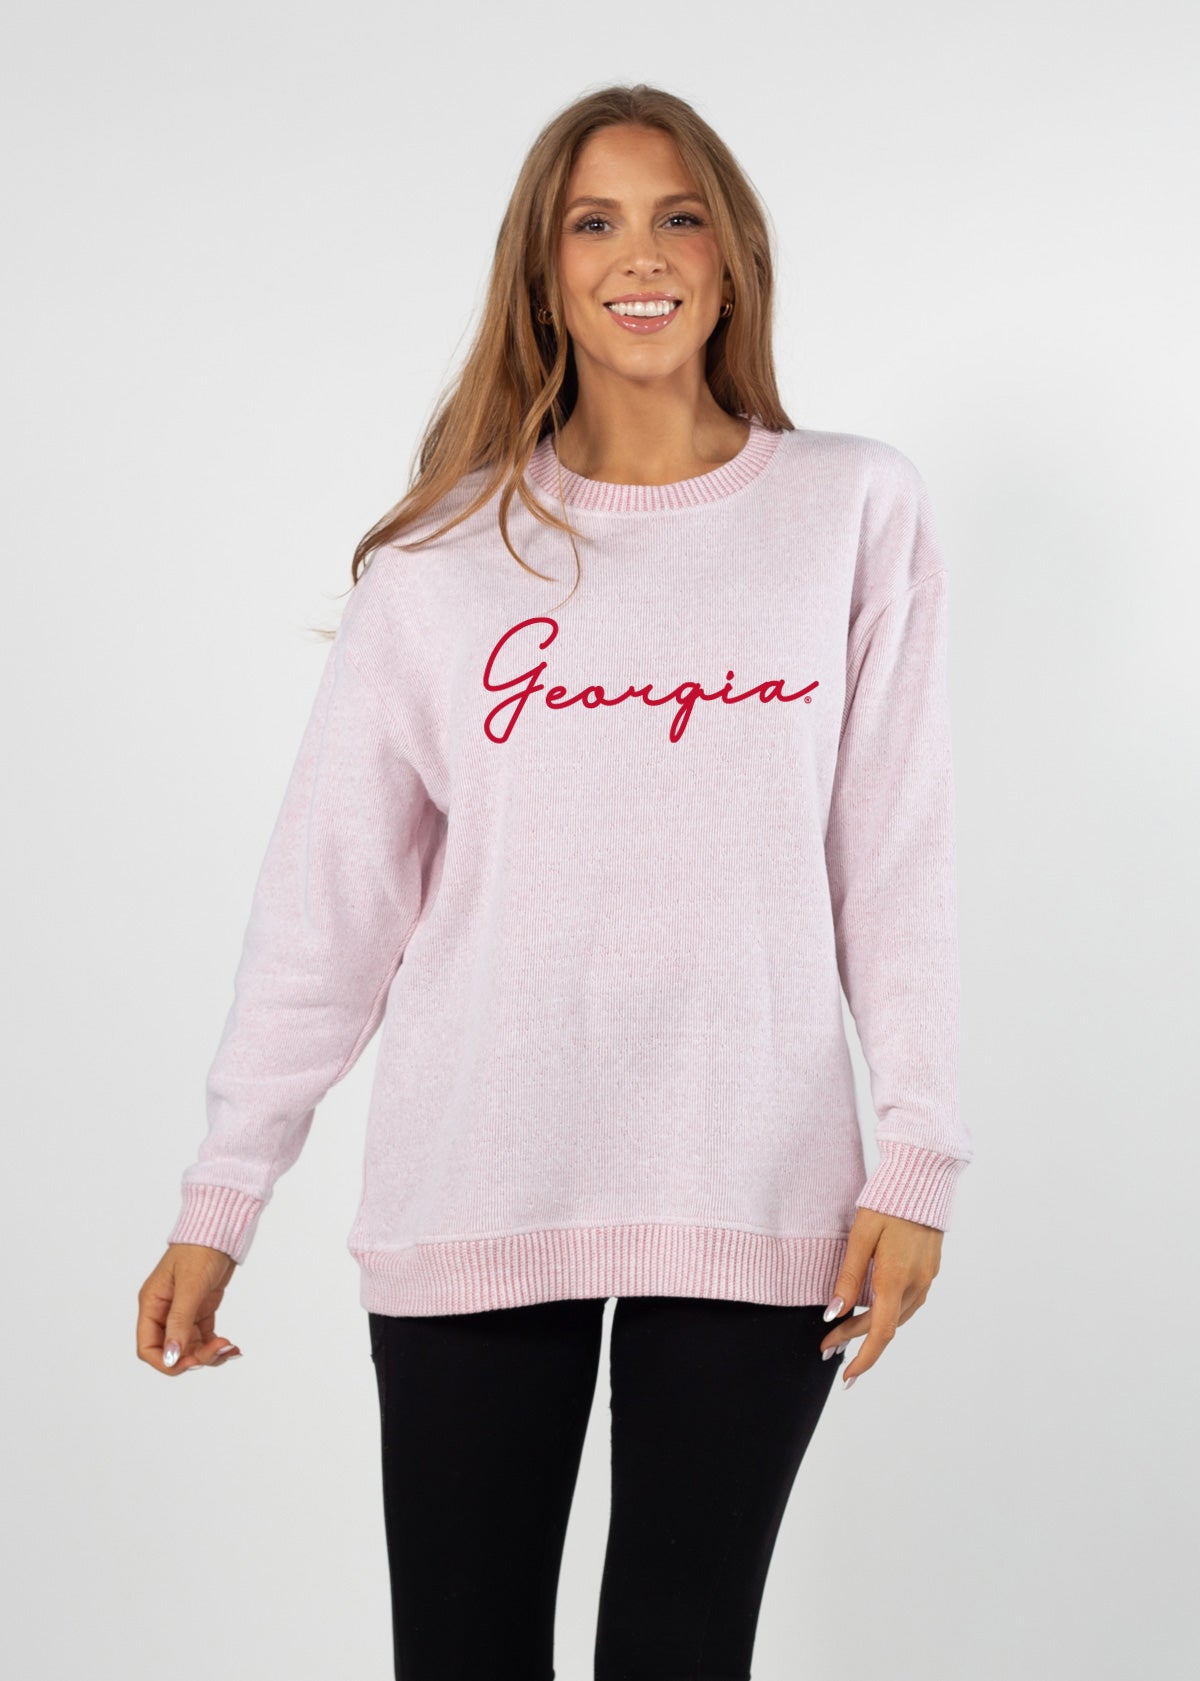 Georgia Bulldogs sweatshirt plus size